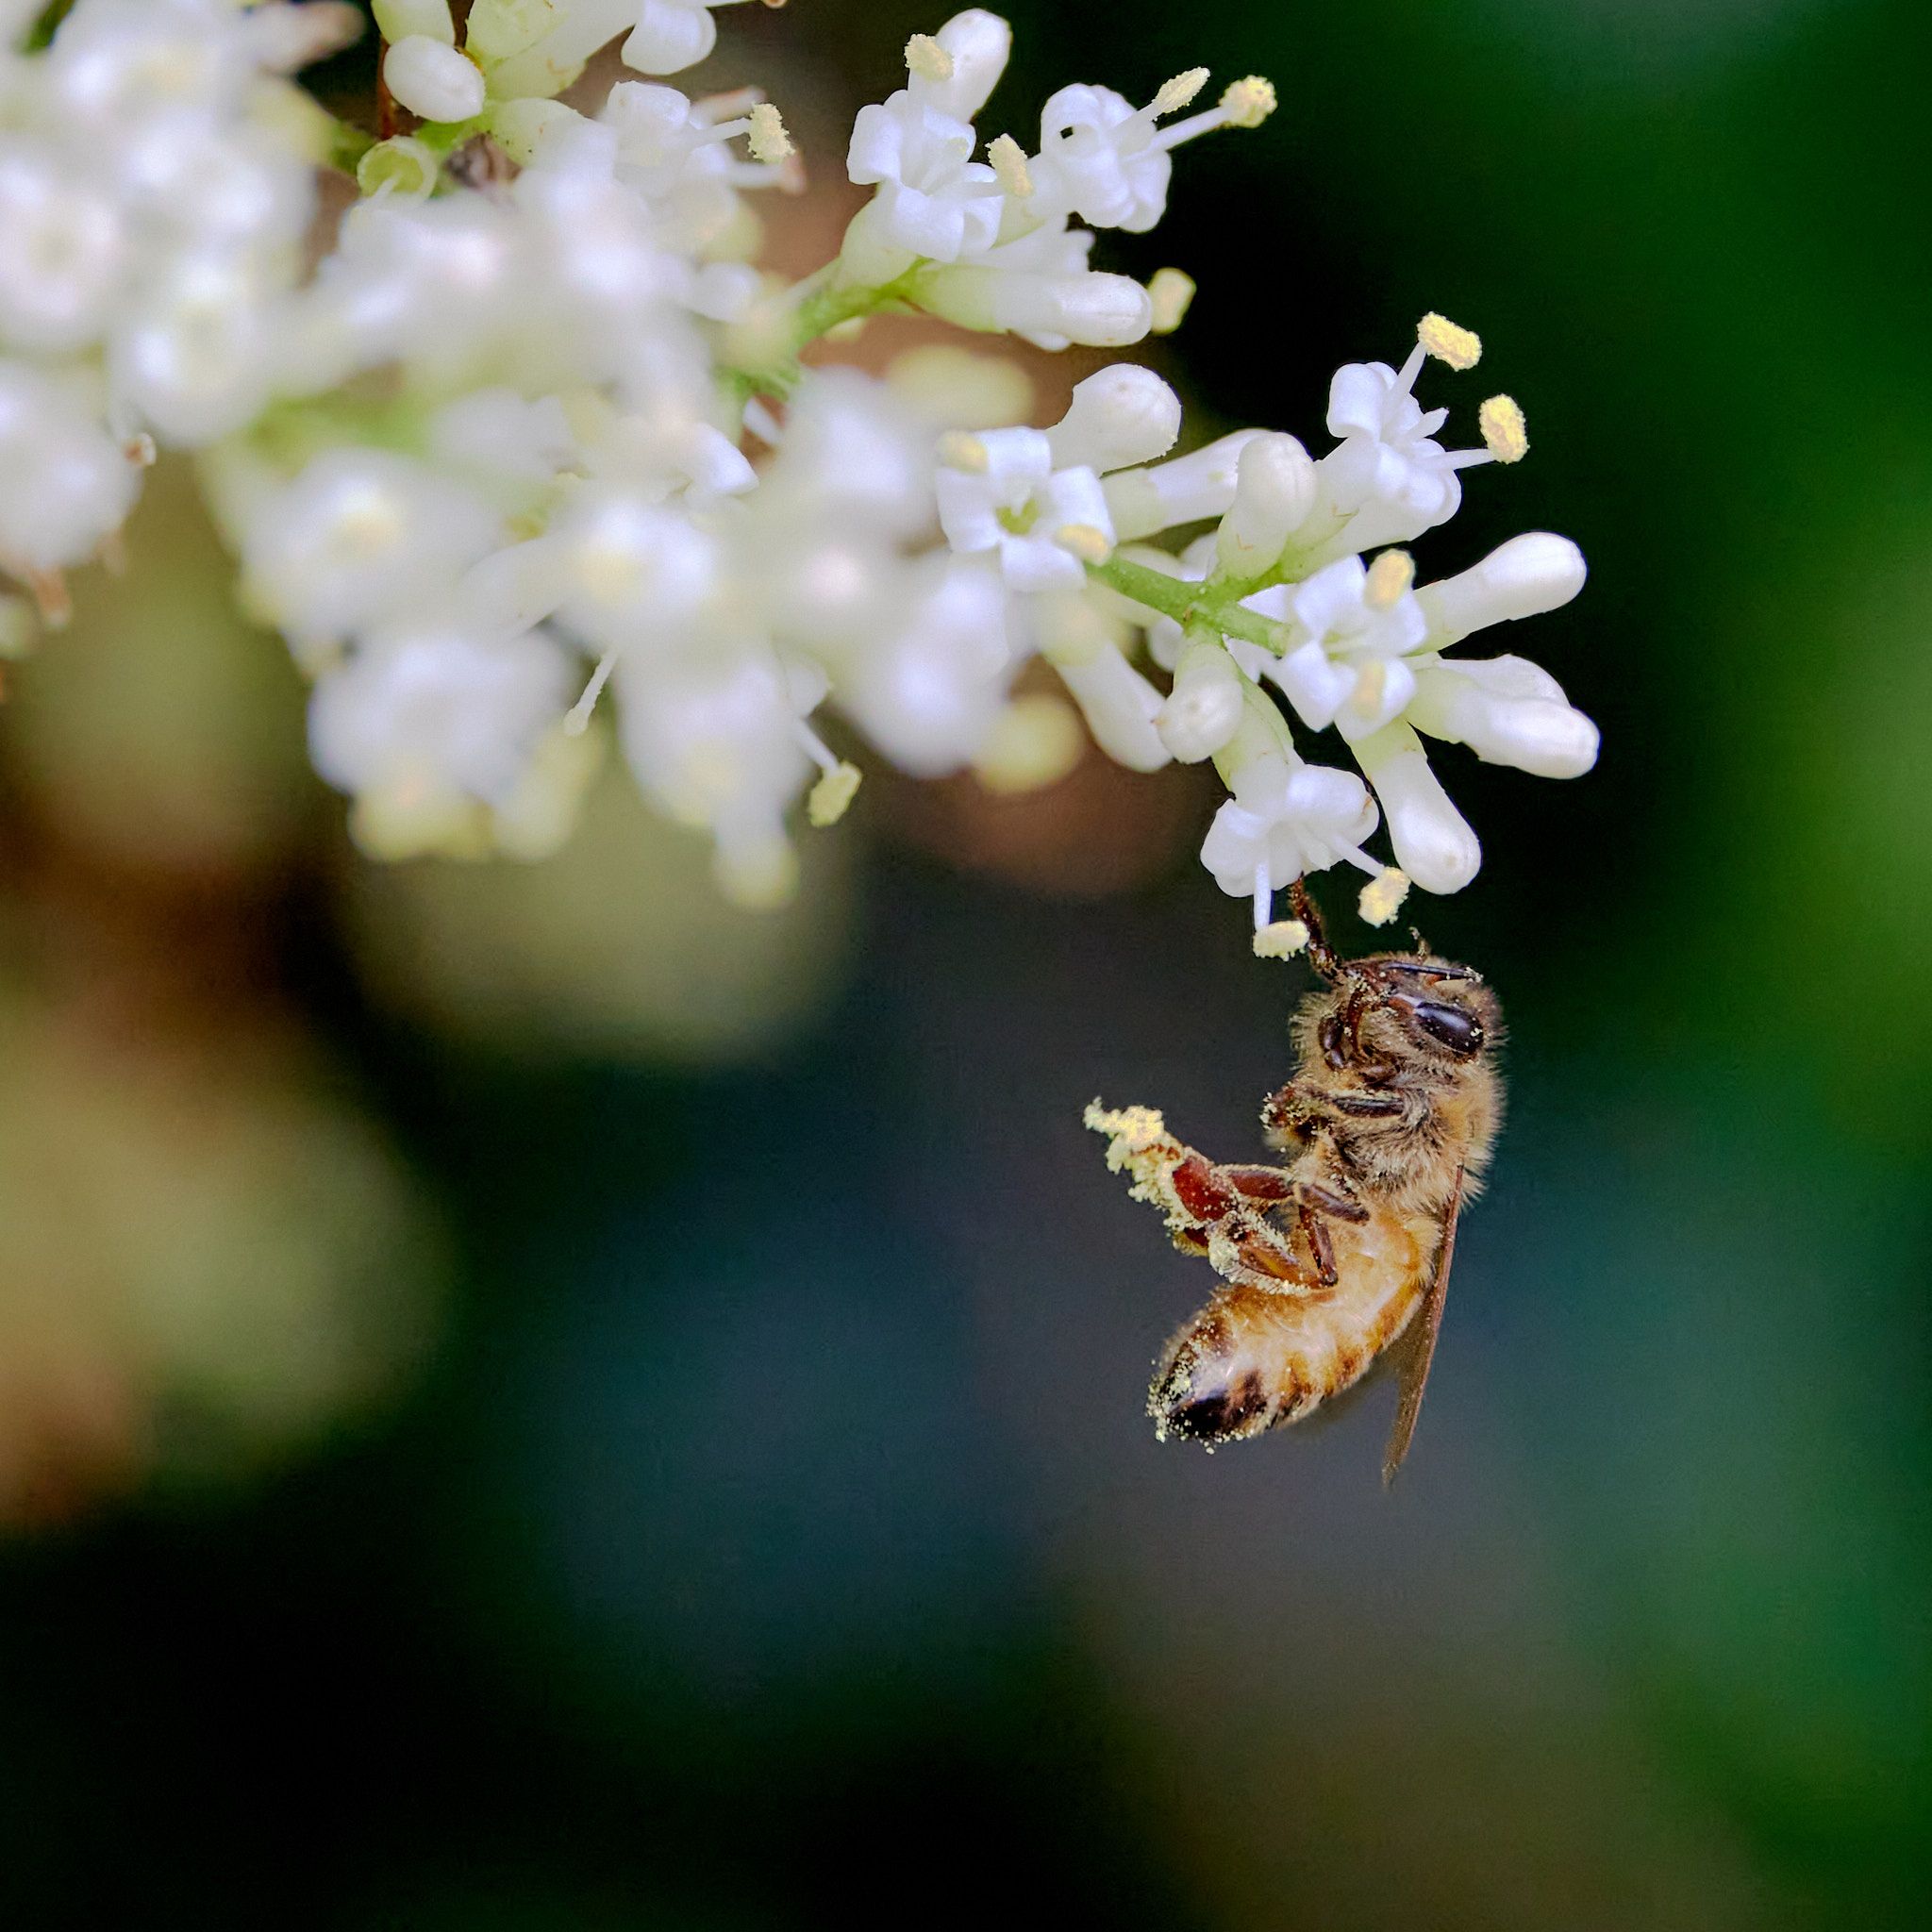 A honeybee covers itself in pollen from a flower in Washington, D.C.